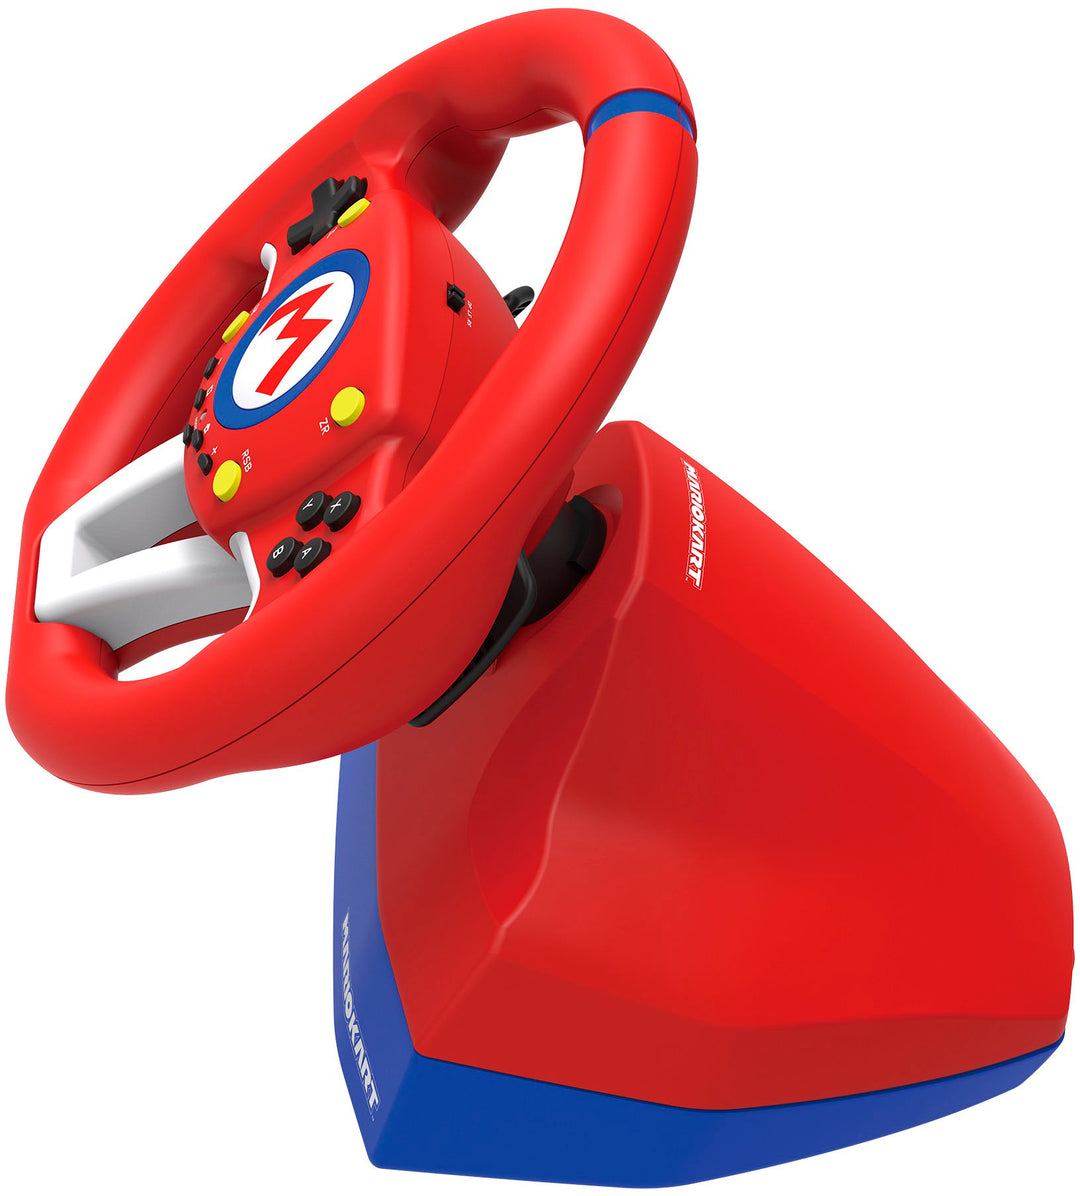 Hori - Mario Kart Racing Wheel Pro Mini for Nintendo Switch - Red_2